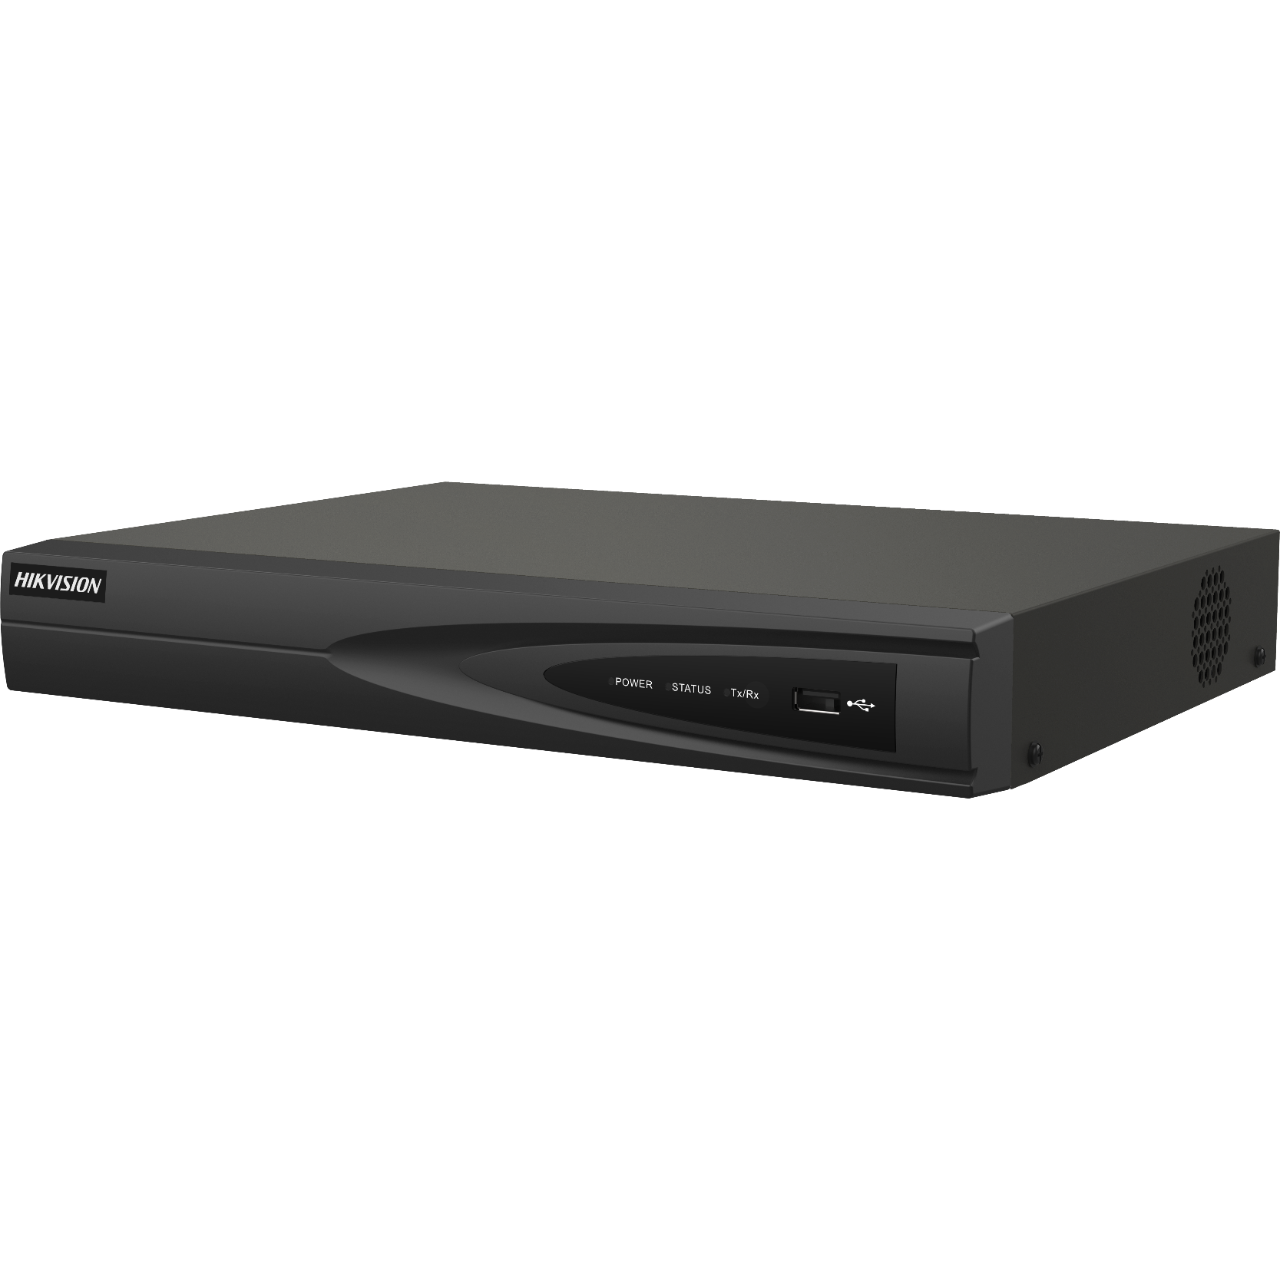 Hikvision 8Chn 4K POE Network Video Recorder - DS-7608NI-Q1/8P